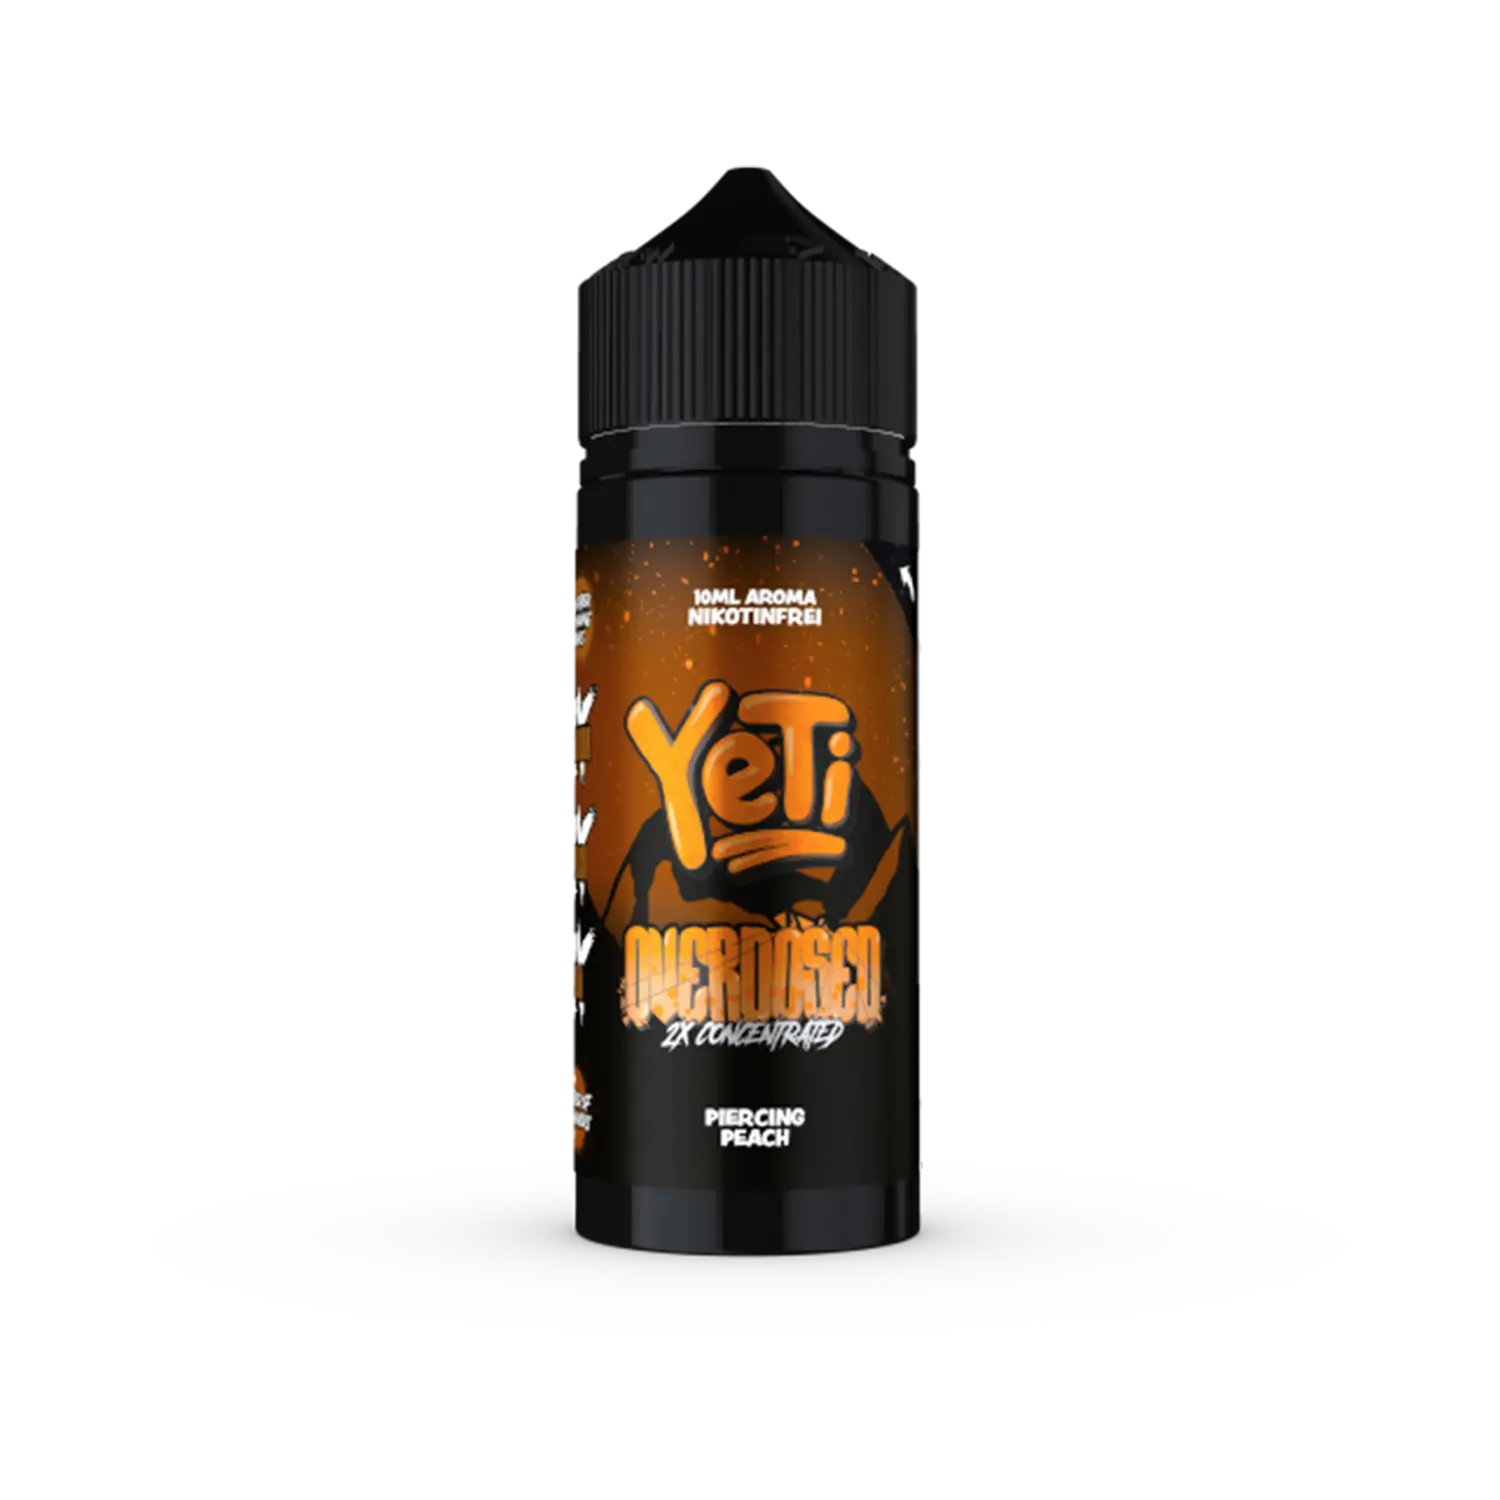 Yeti - Overdosed - Piercing Peach 10 ml Aroma